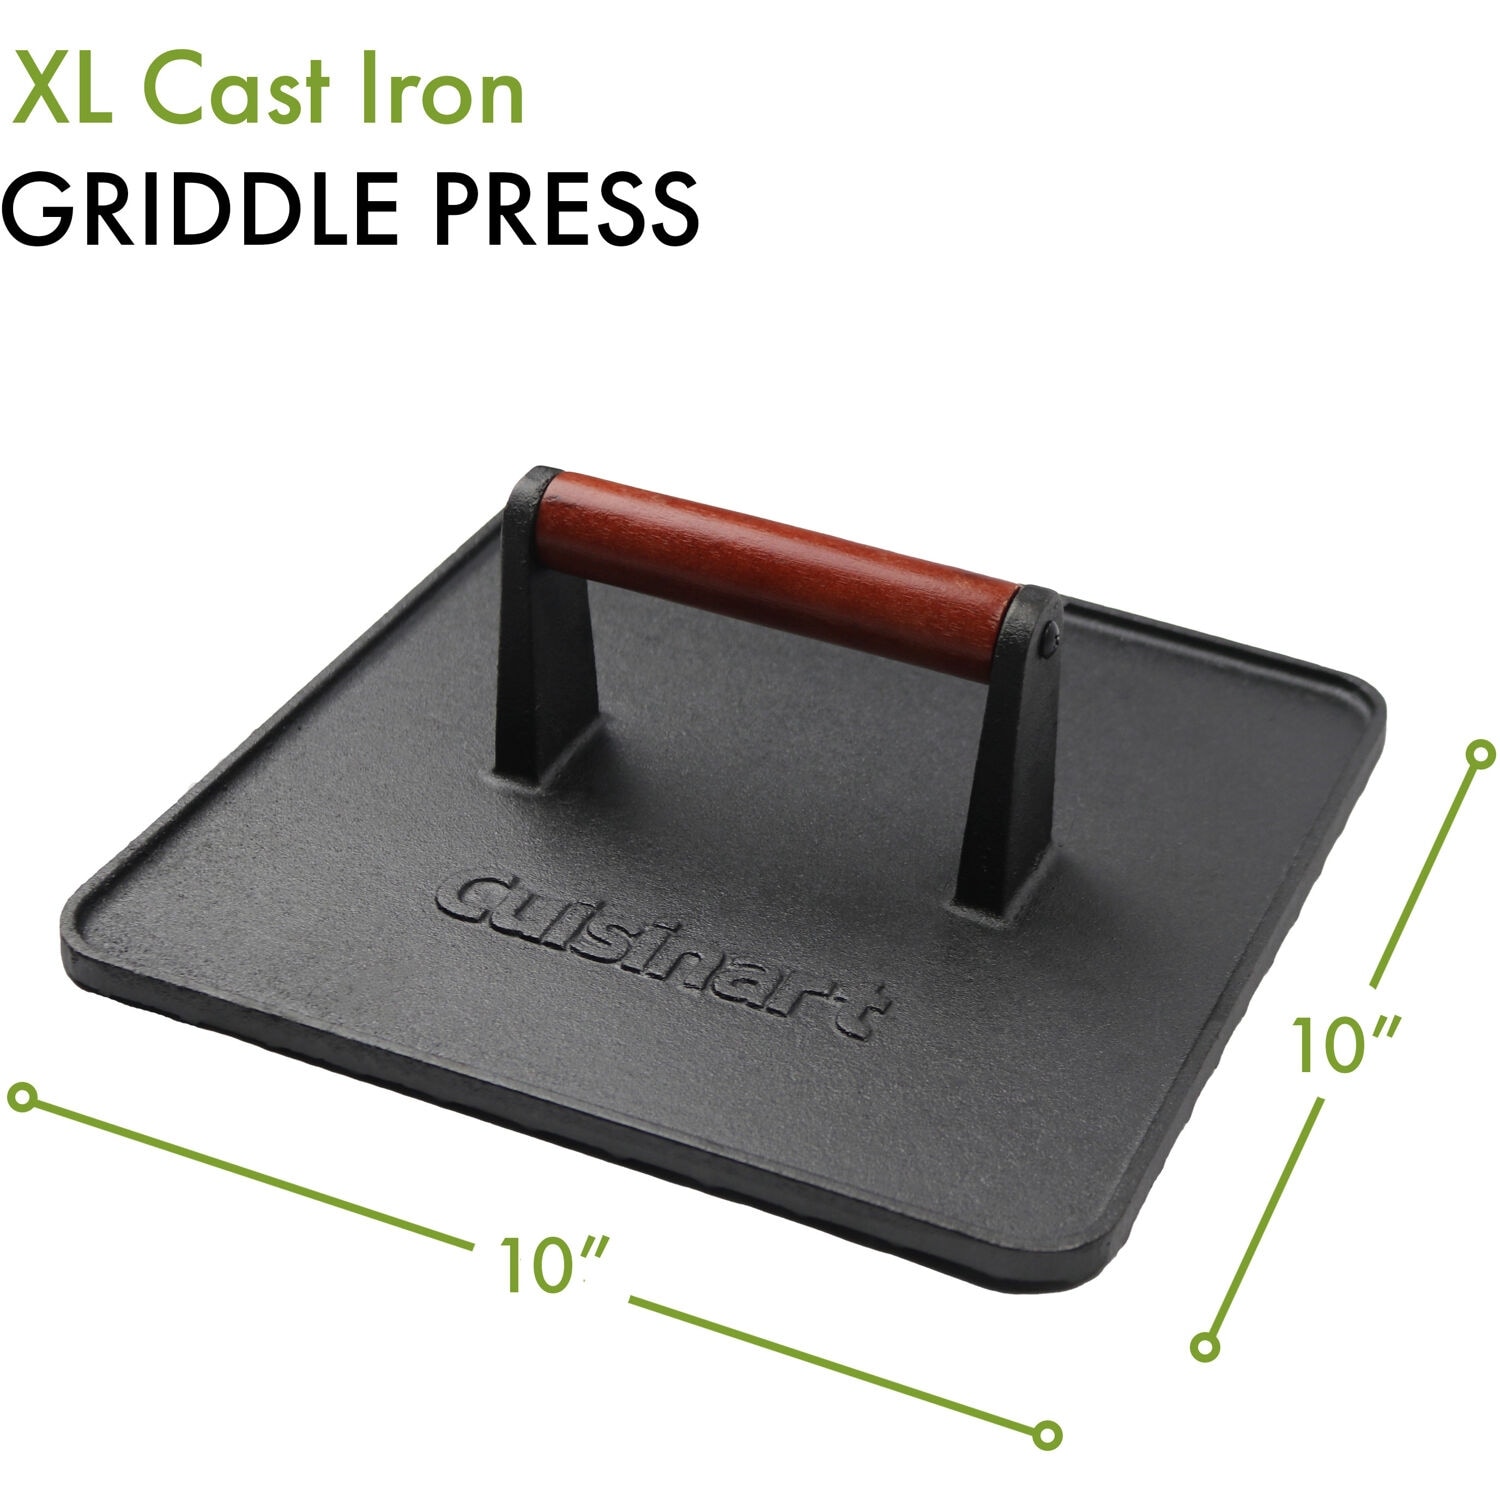 https://ak1.ostkcdn.com/images/products/is/images/direct/9d5afe5923e3365b115566b1af94027f9318fdaa/Cuisinart-XL-Cast-Iron-Griddle-Press.jpg